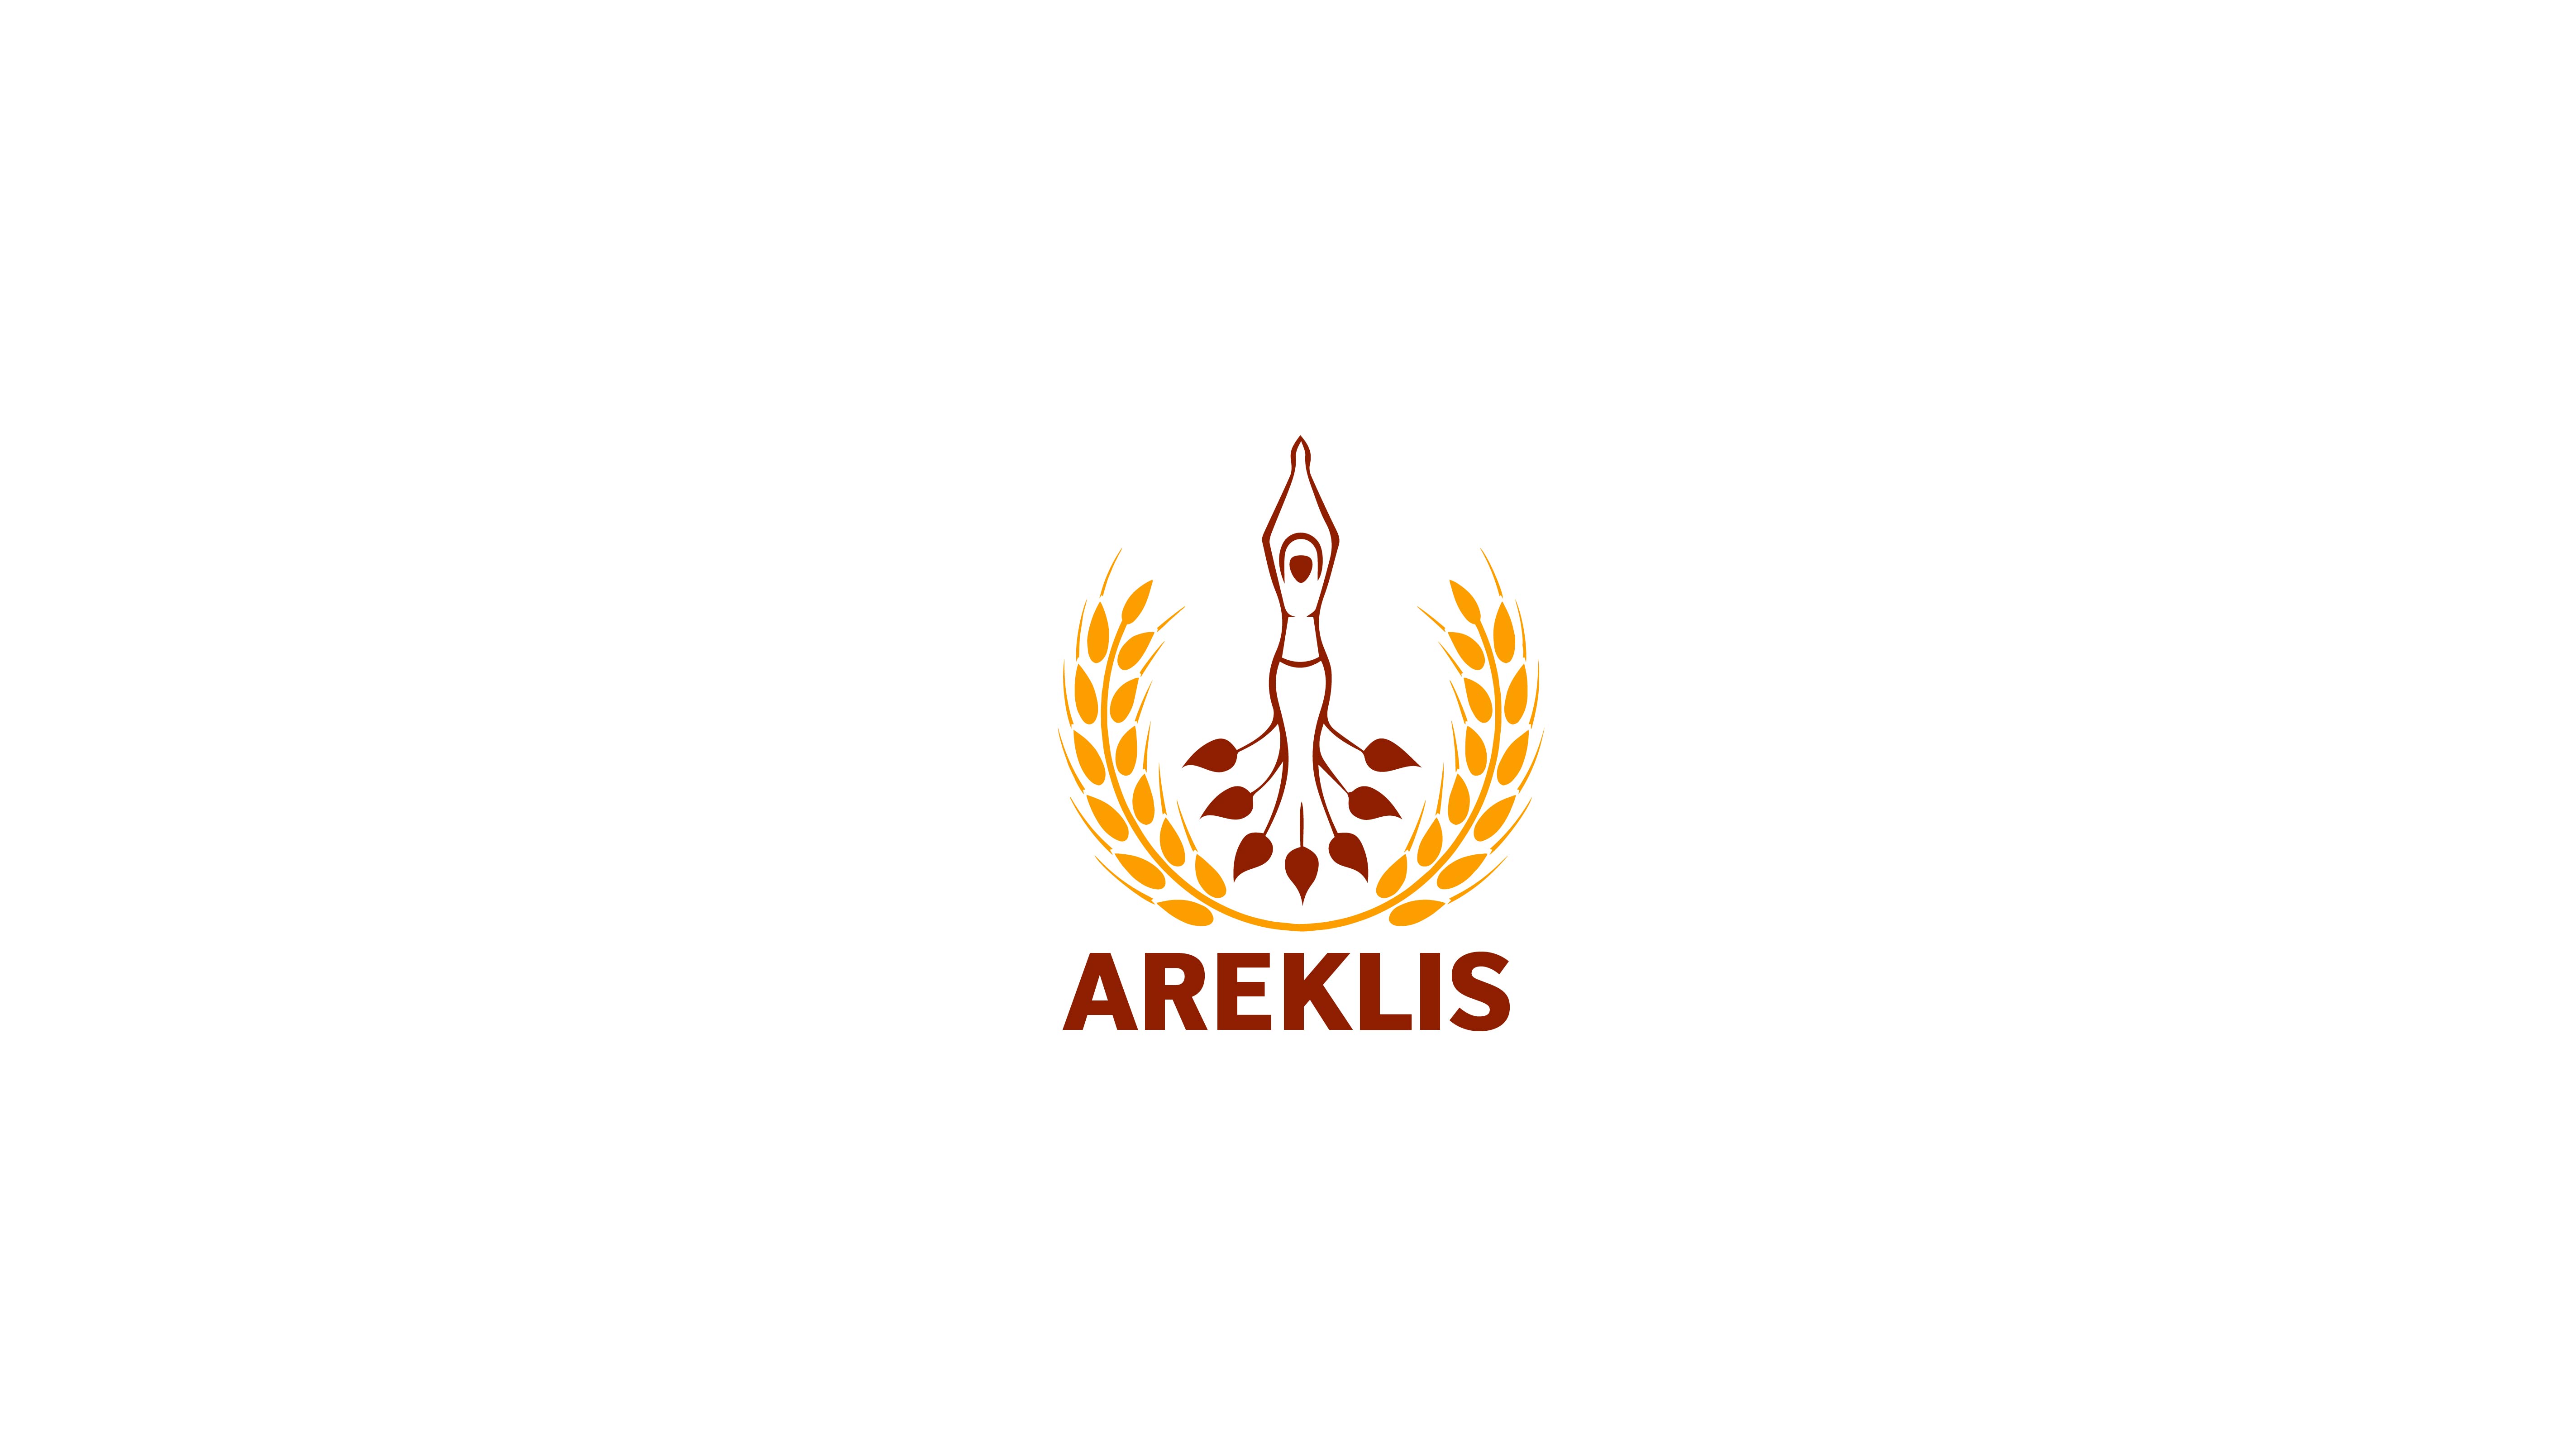 Areklis